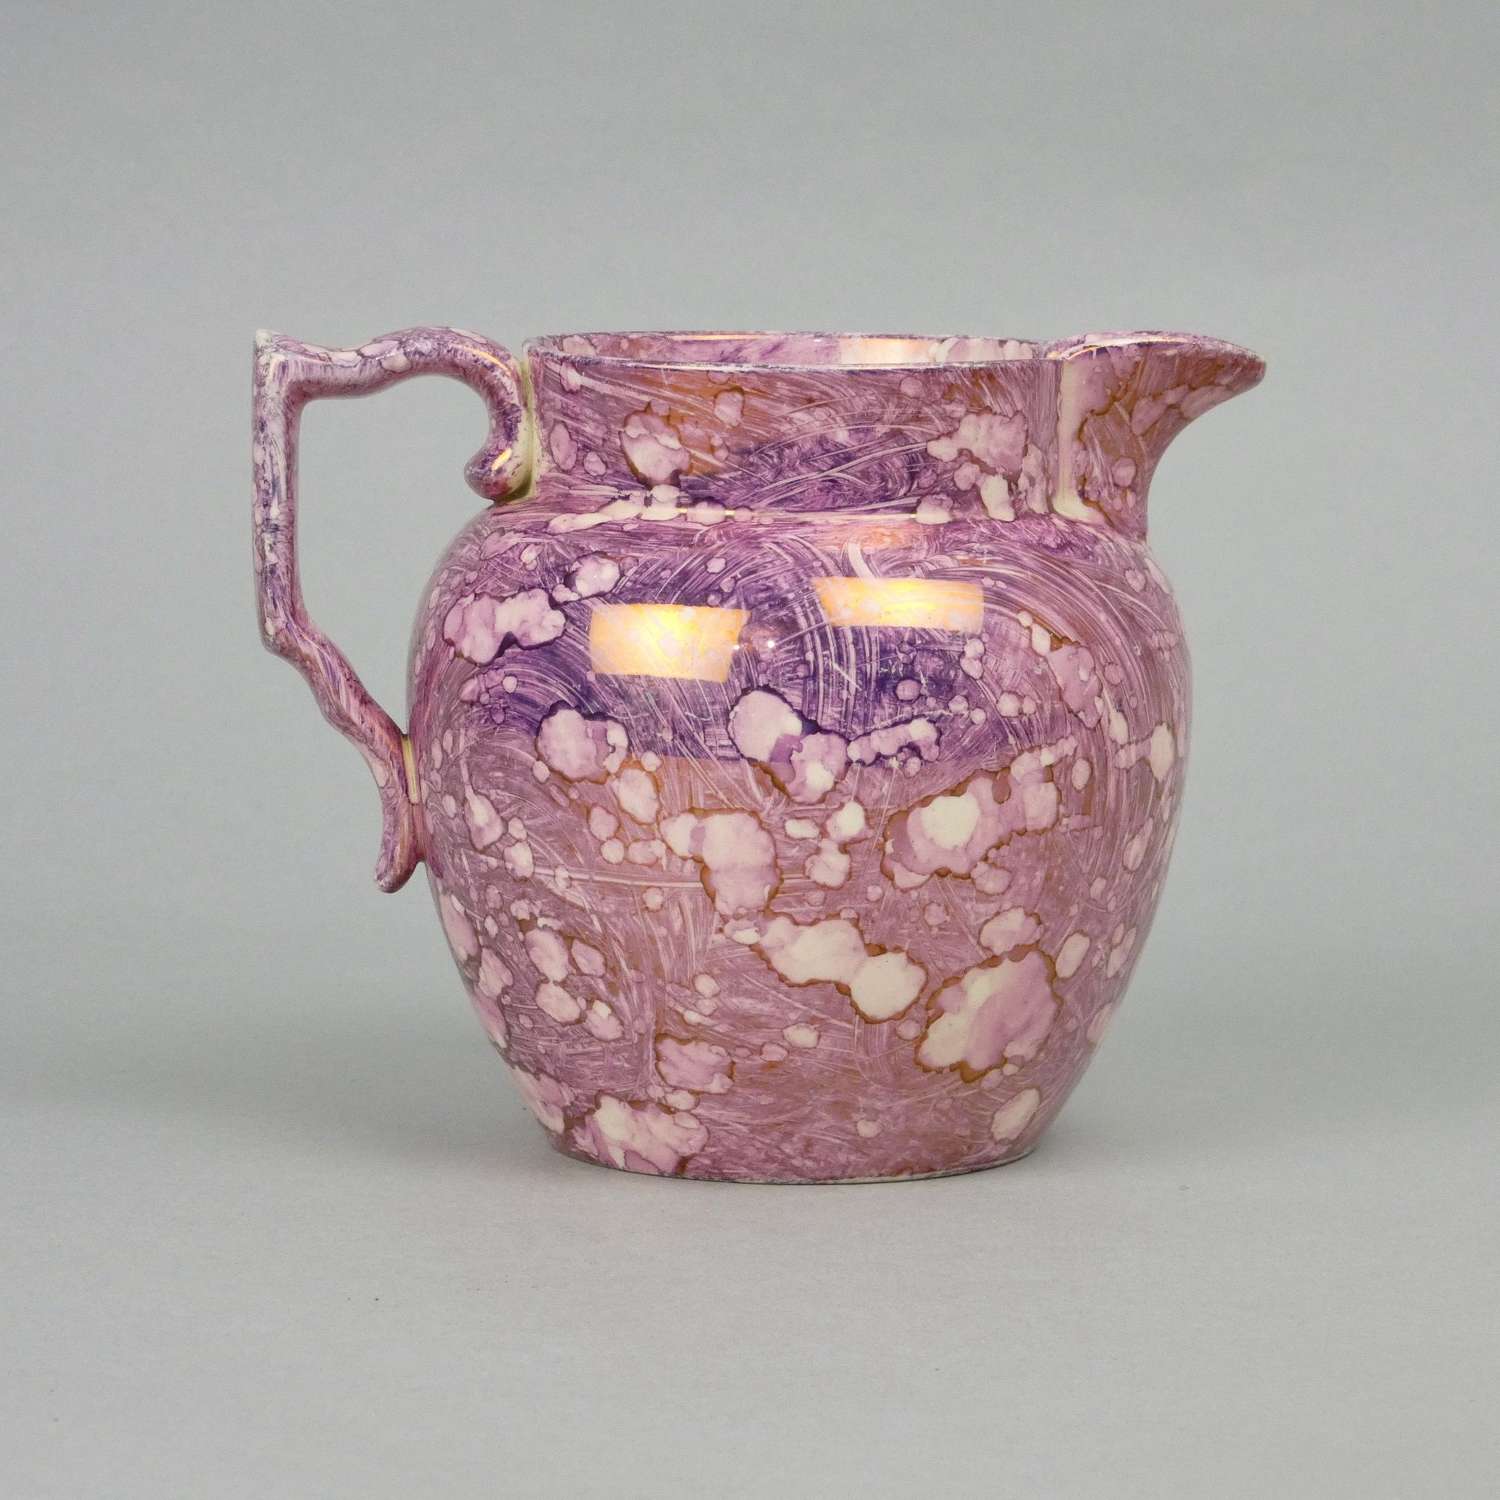 Early 19th century, pink splash lustre jug.